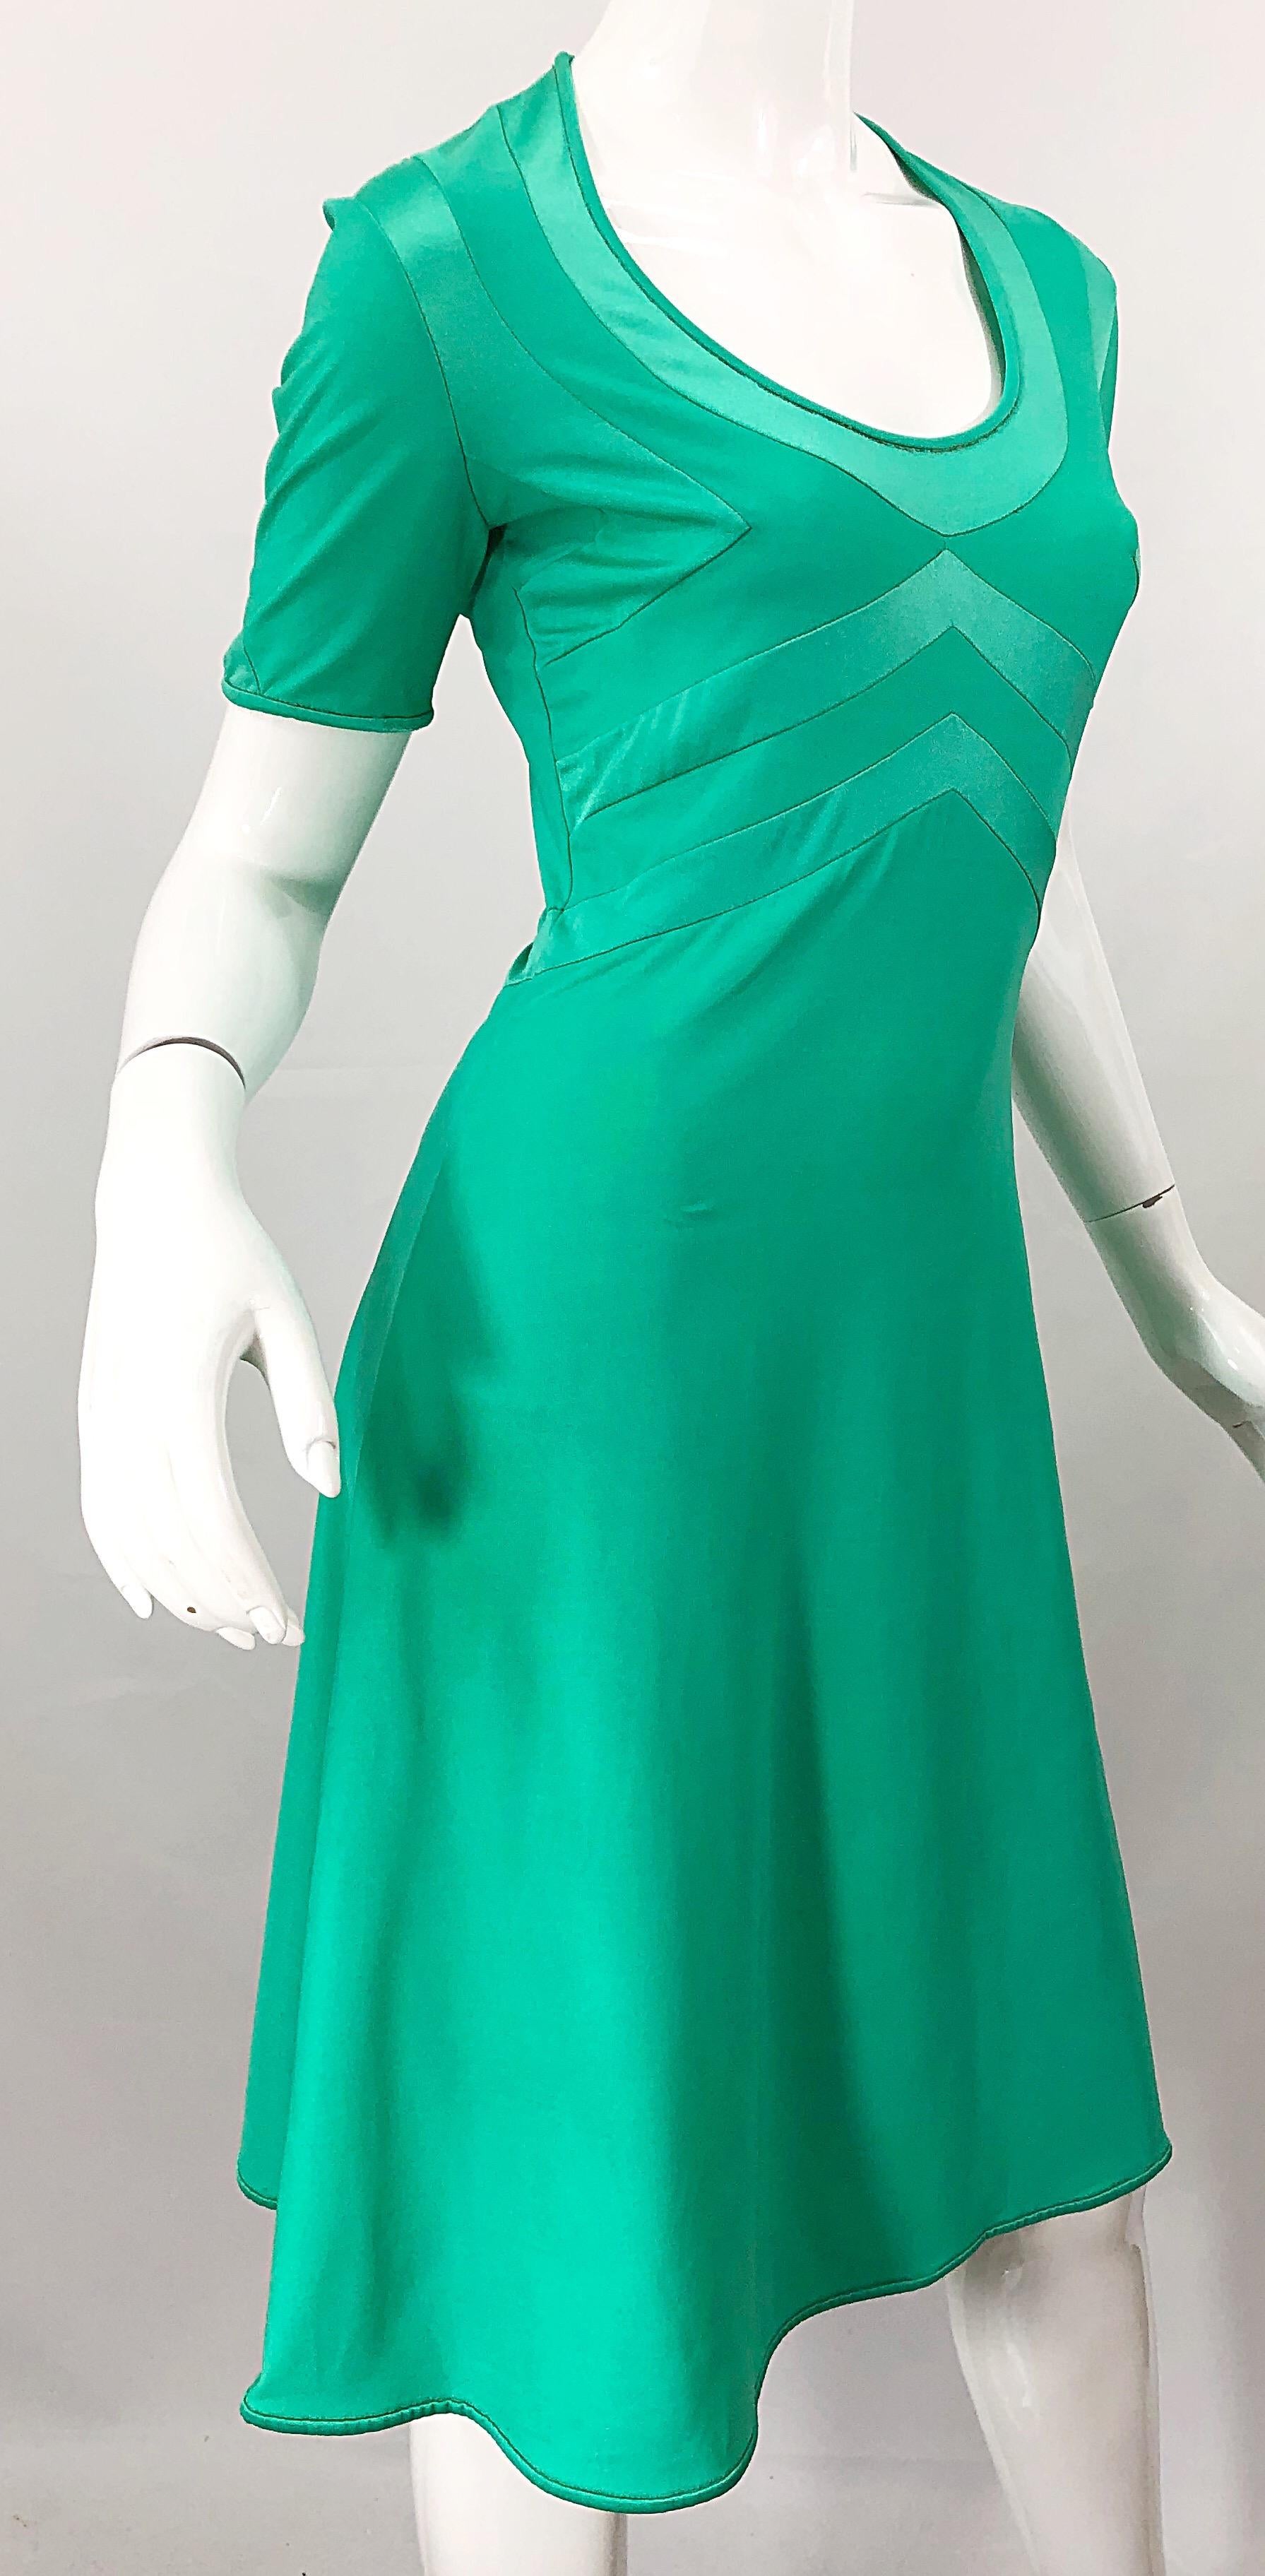 1970s Giorgio di Sant Angelo Kelly Green Slinky Bodysuit 70s Vintage Dress For Sale 1